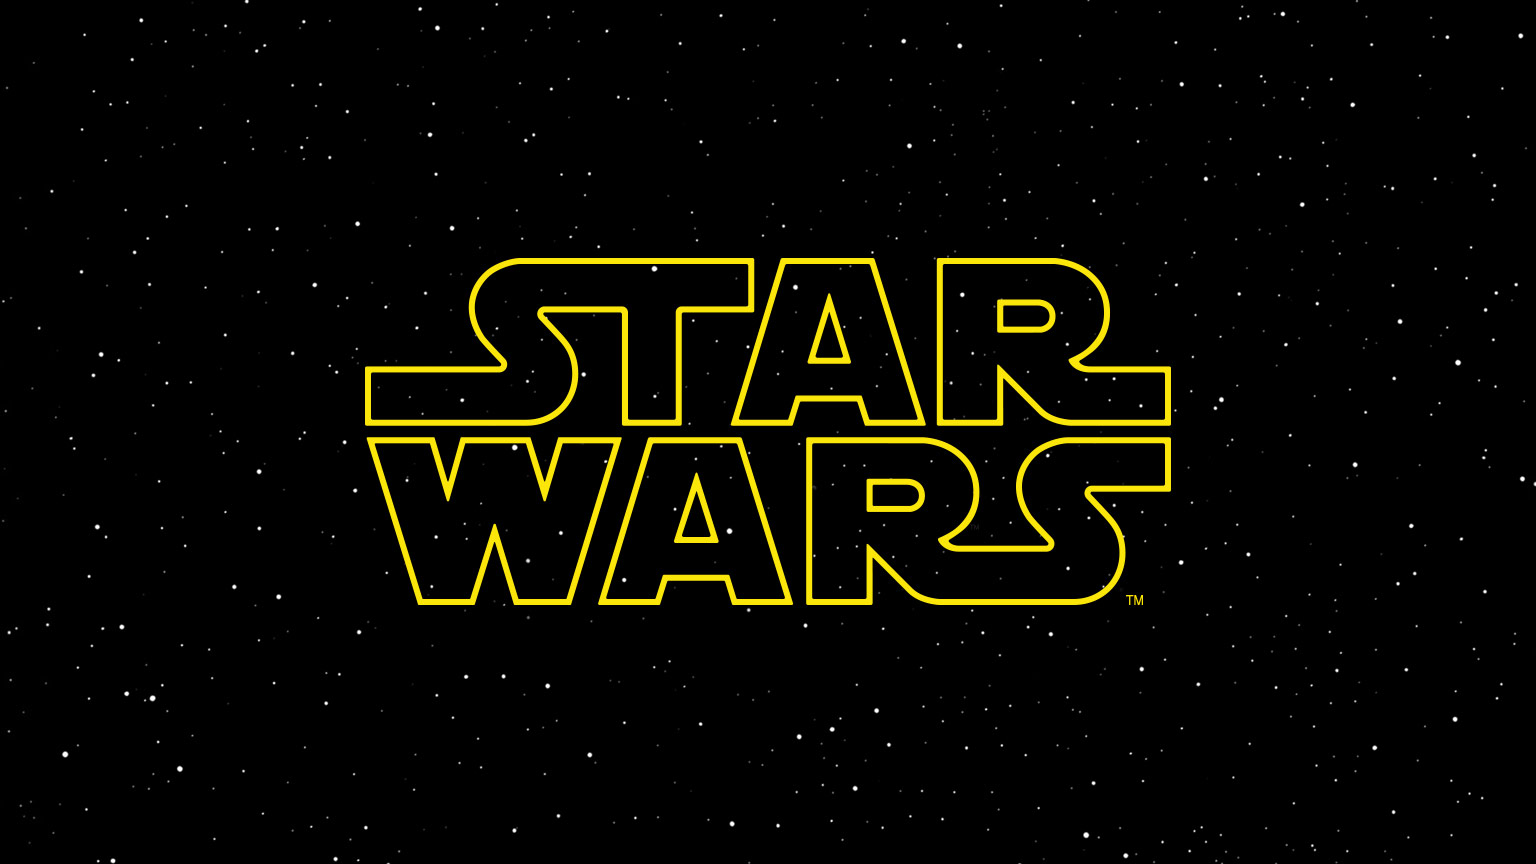 Star-wars-logo-new-tall.jpg